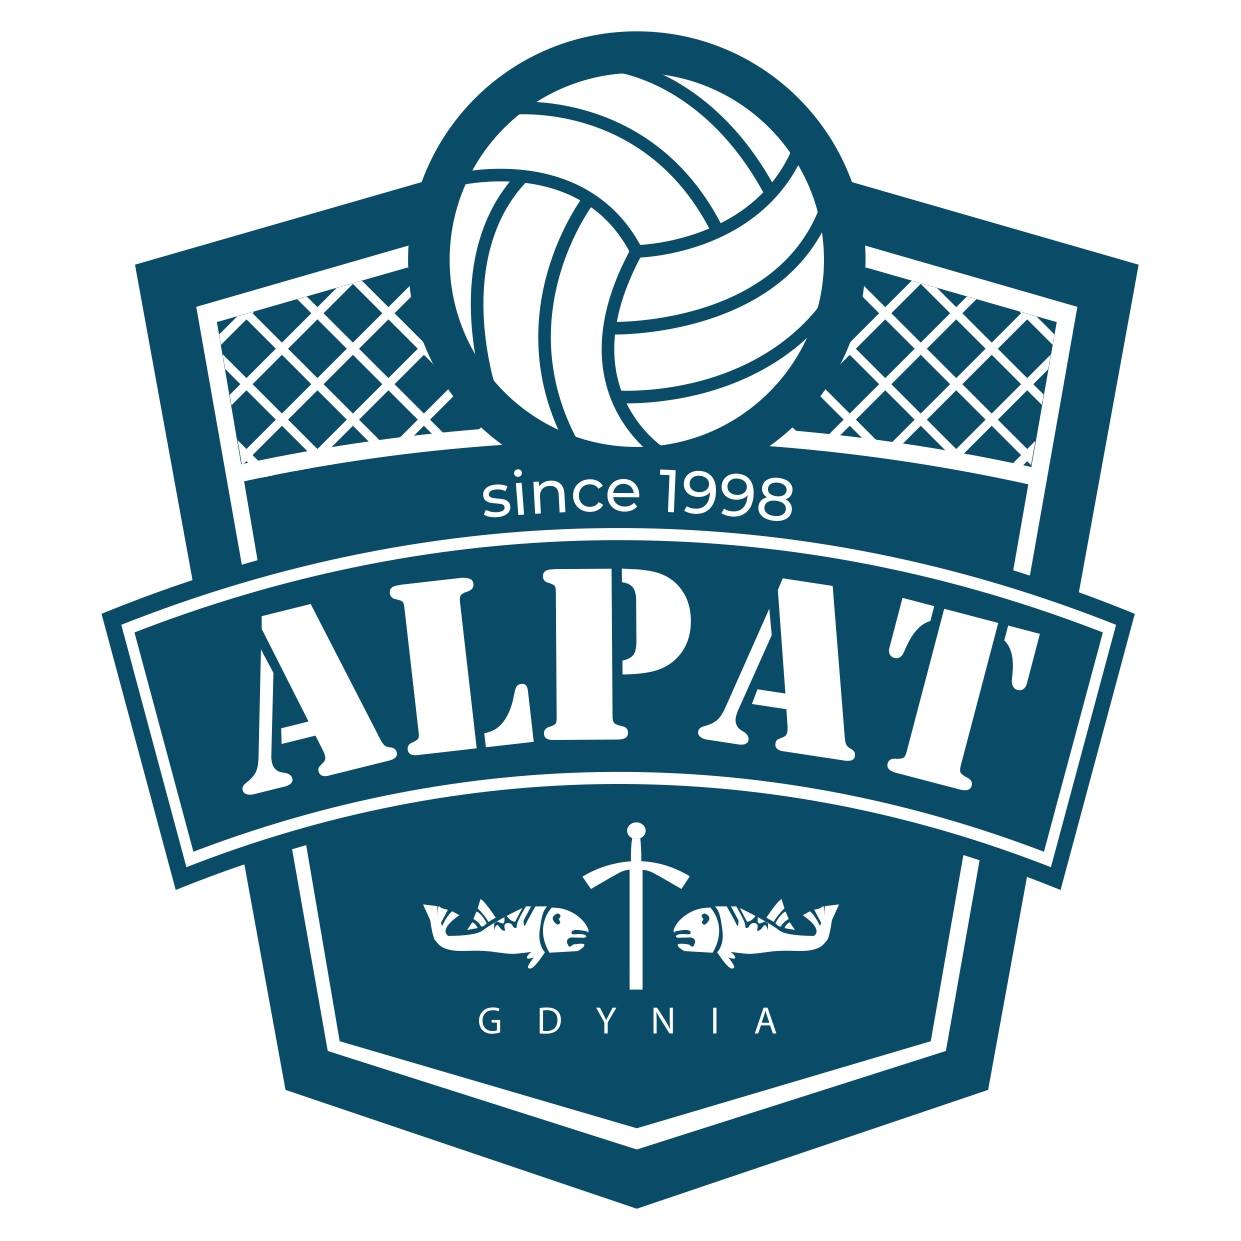 KATS Alpat Gdynia Logo